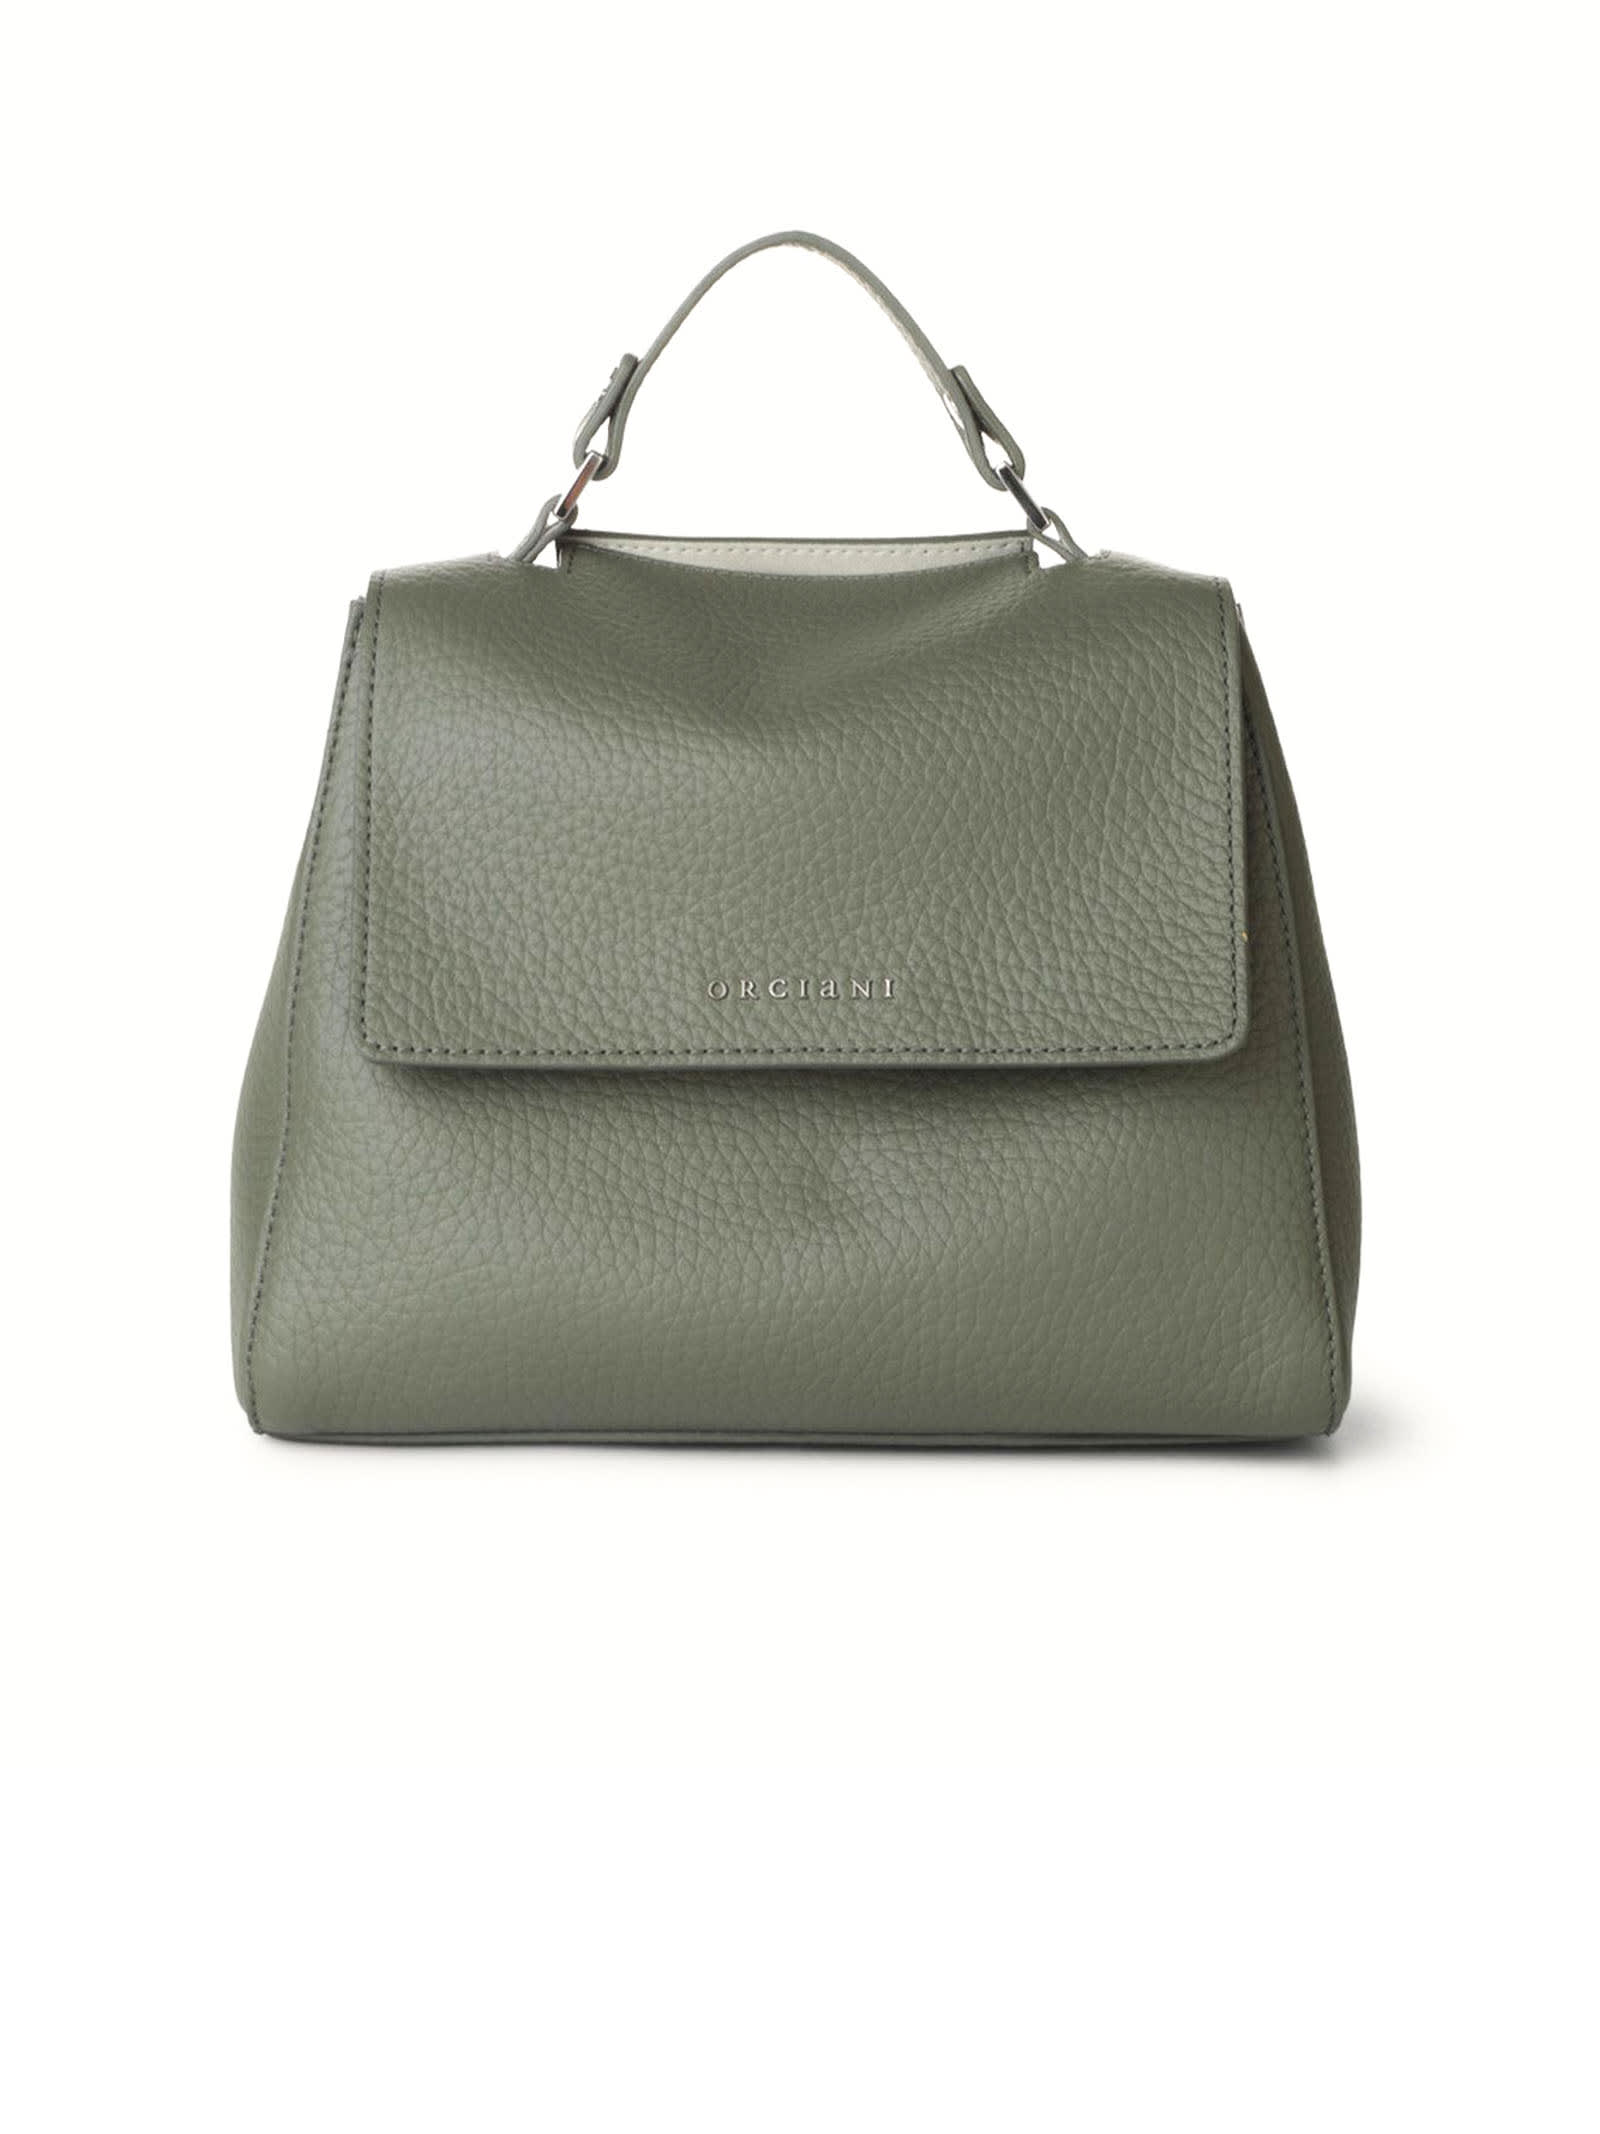 Orciani Sveva Soft Small Green Grained Leather Handbag